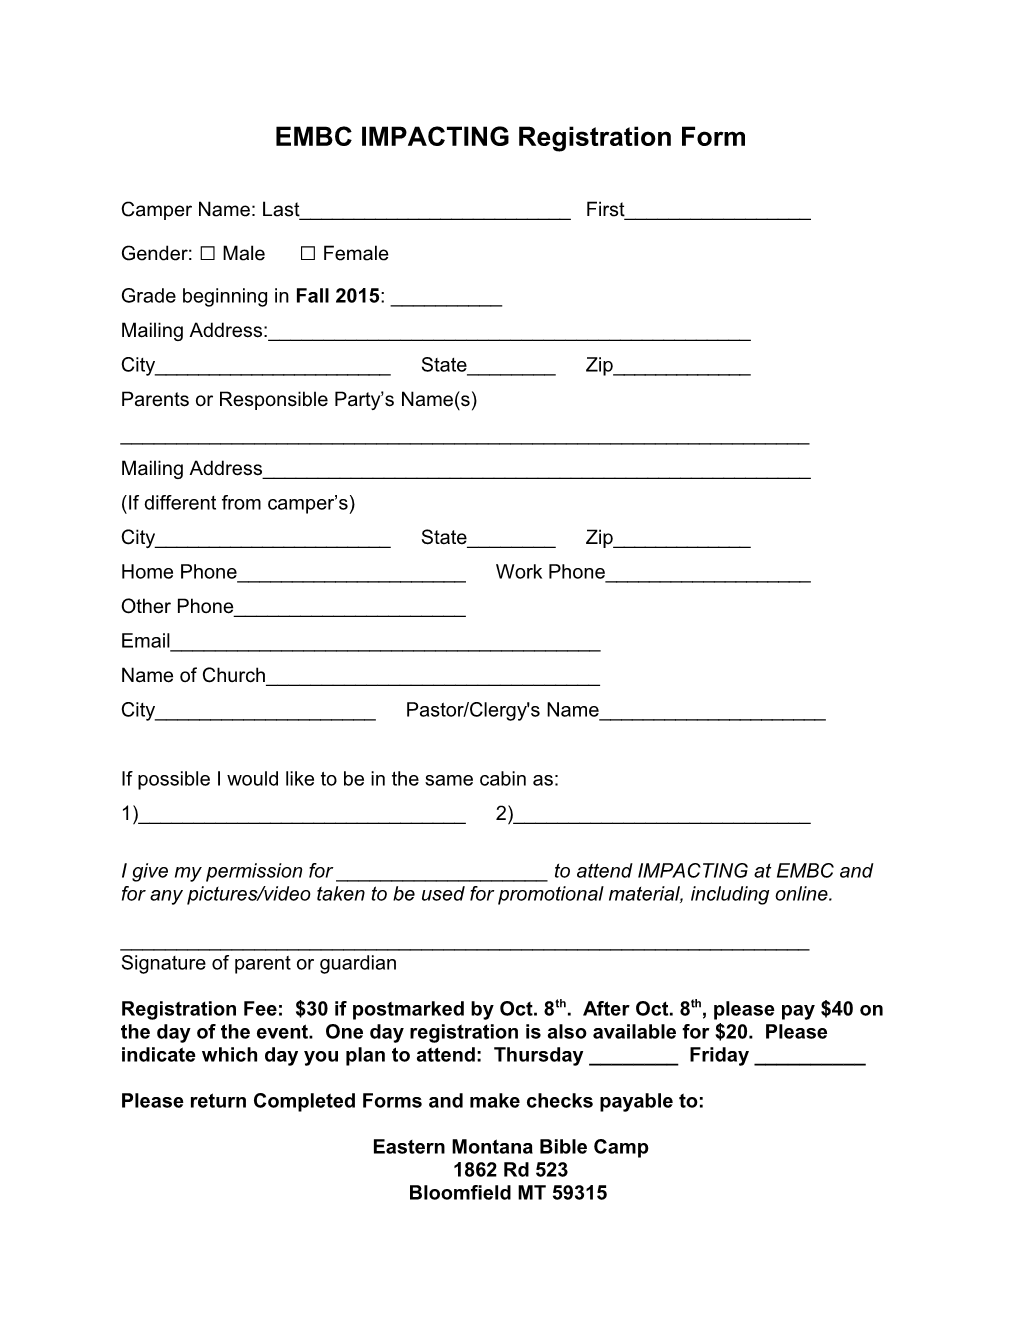 EMBC Registration Form